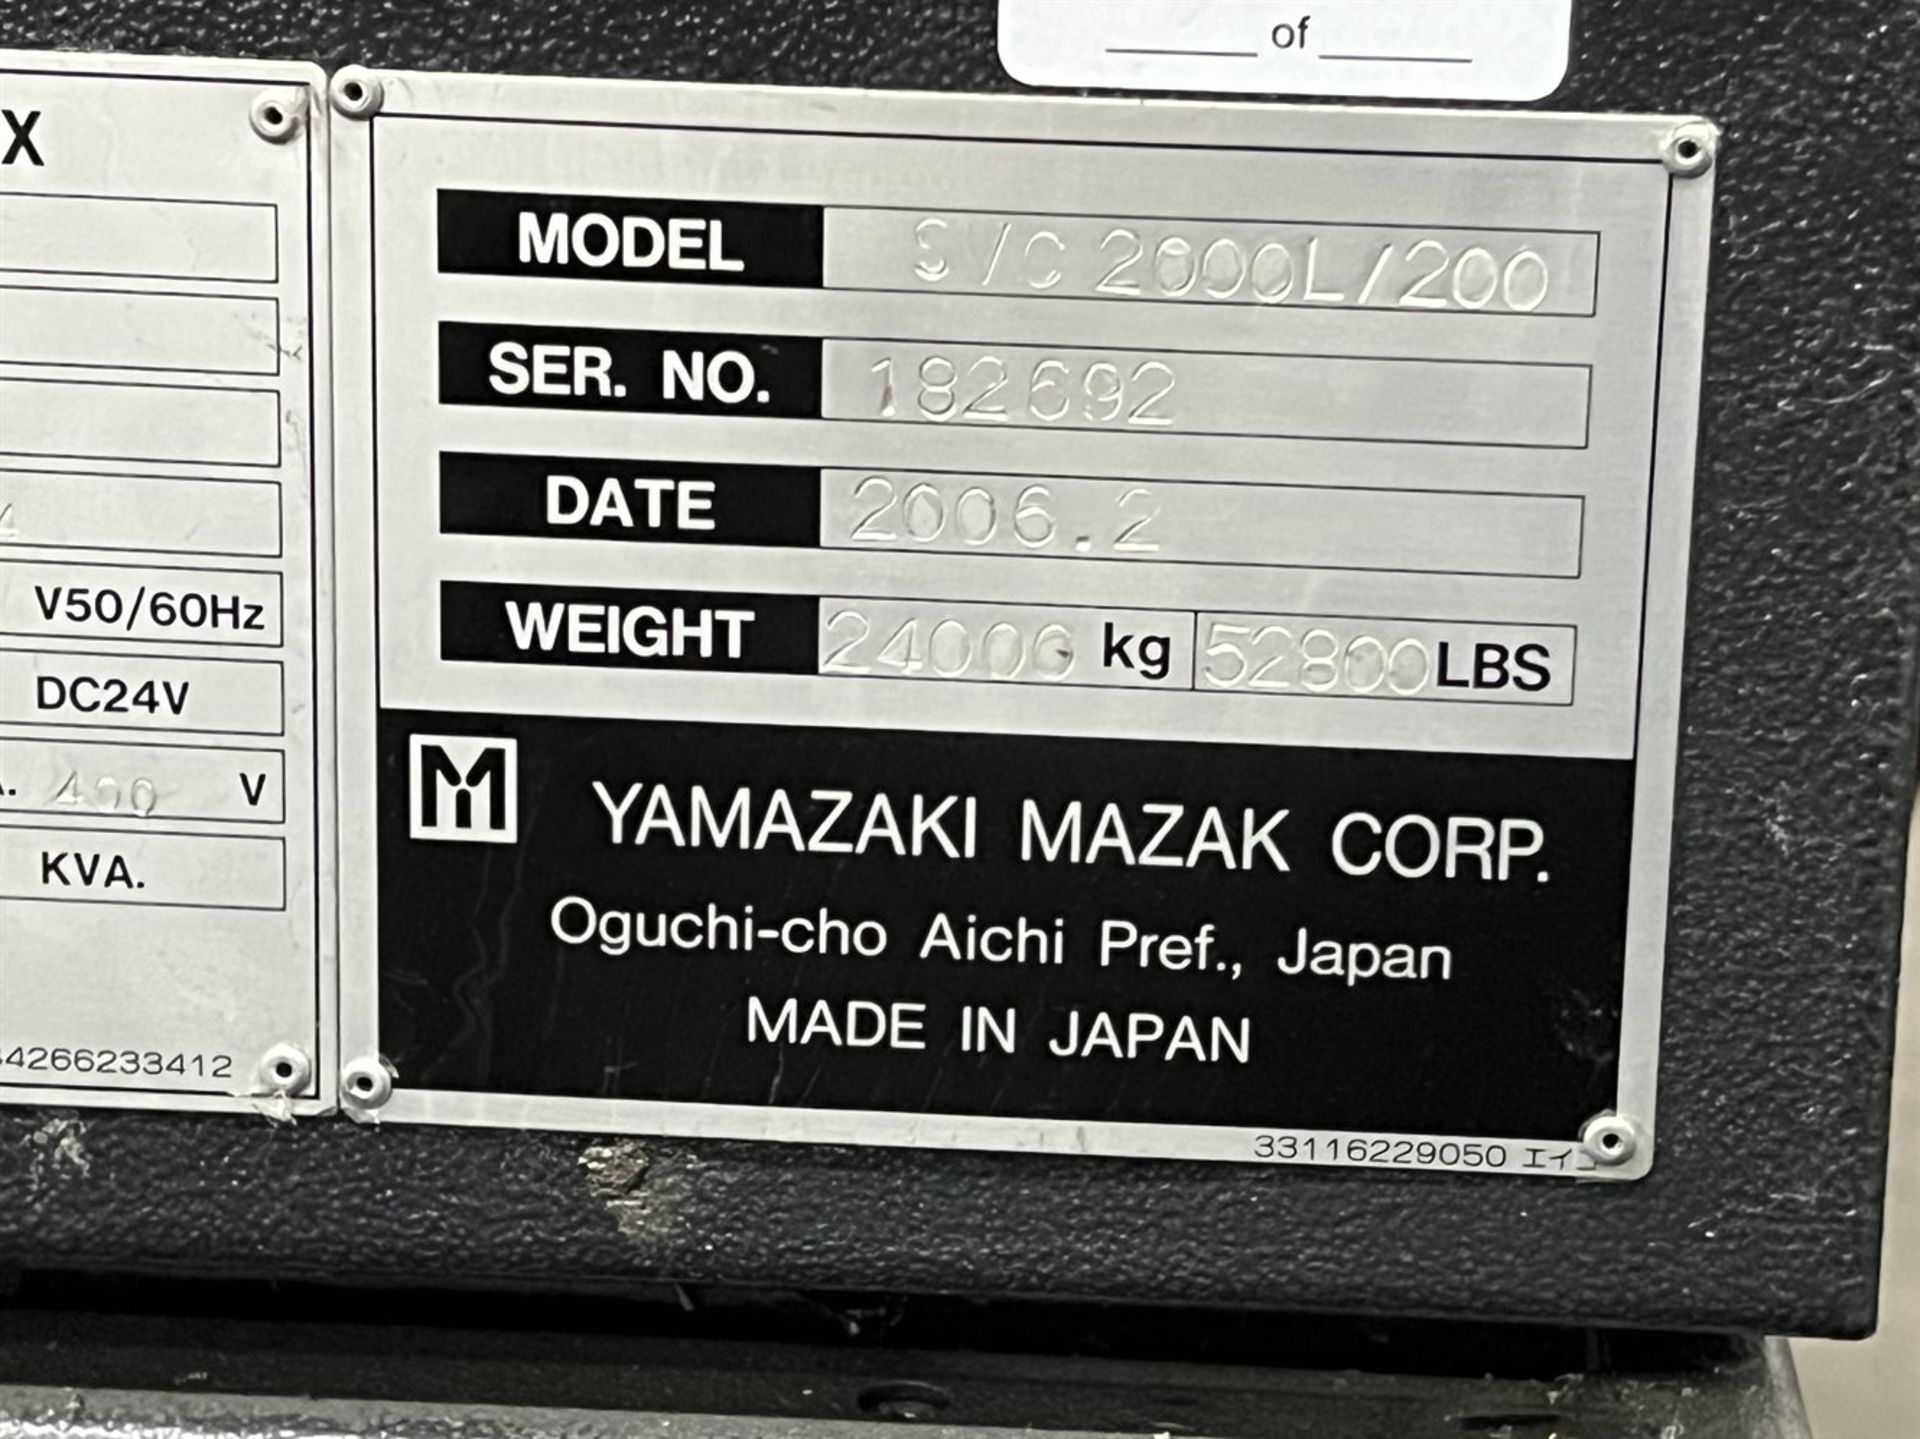 2006 MAZAK SVC 2000L/200 CNC Vertical Machining Center, s/n 182692, Mazatrol 640M Control, 212.6" - Image 20 of 23